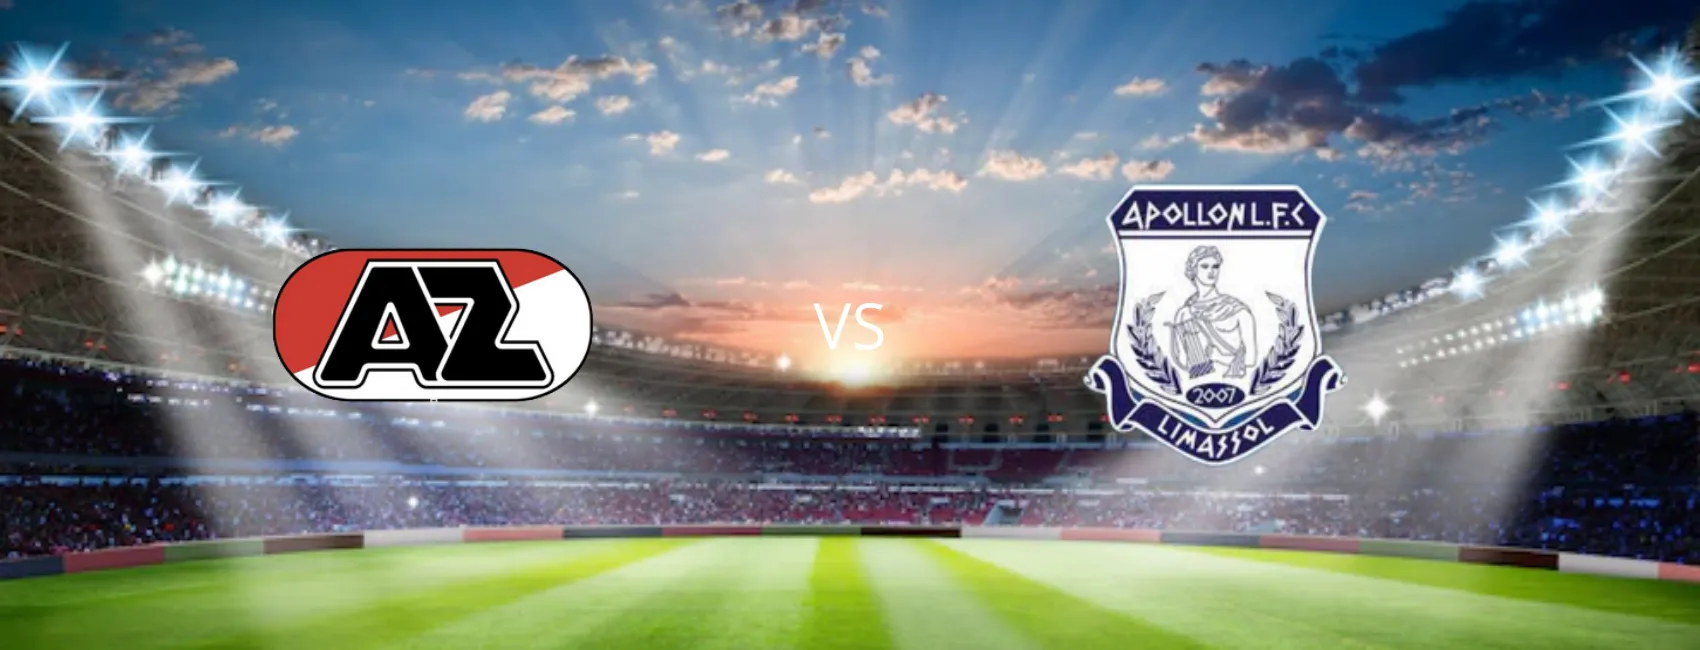 Video Clip Highlights: AZ Alkmaar vs Apollon Limassol FC – C3 CHÂU ÂU